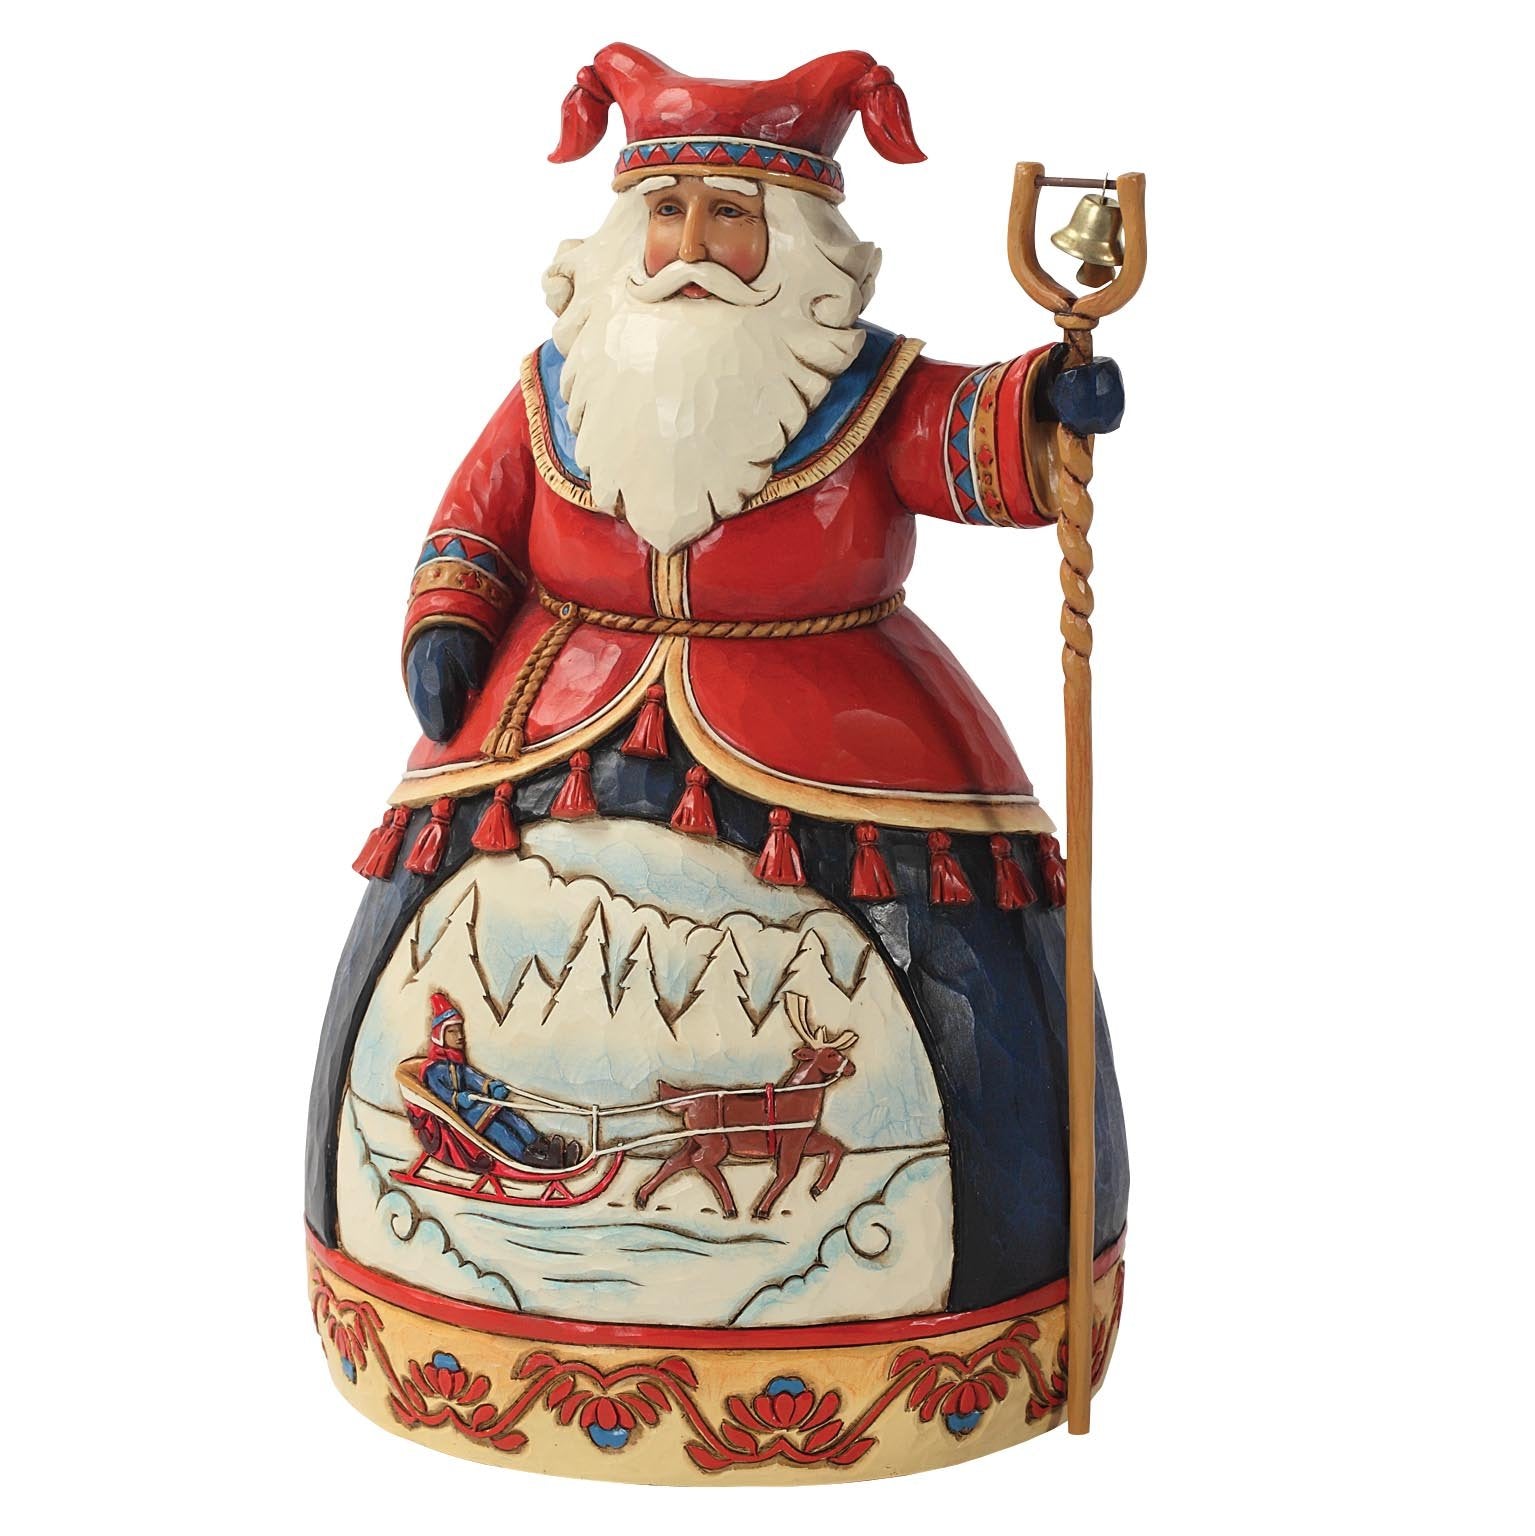 Enesco Jim Shore Heartwood Creek Lapland Santa with Sleigh Scene Figurine, 10-Inch